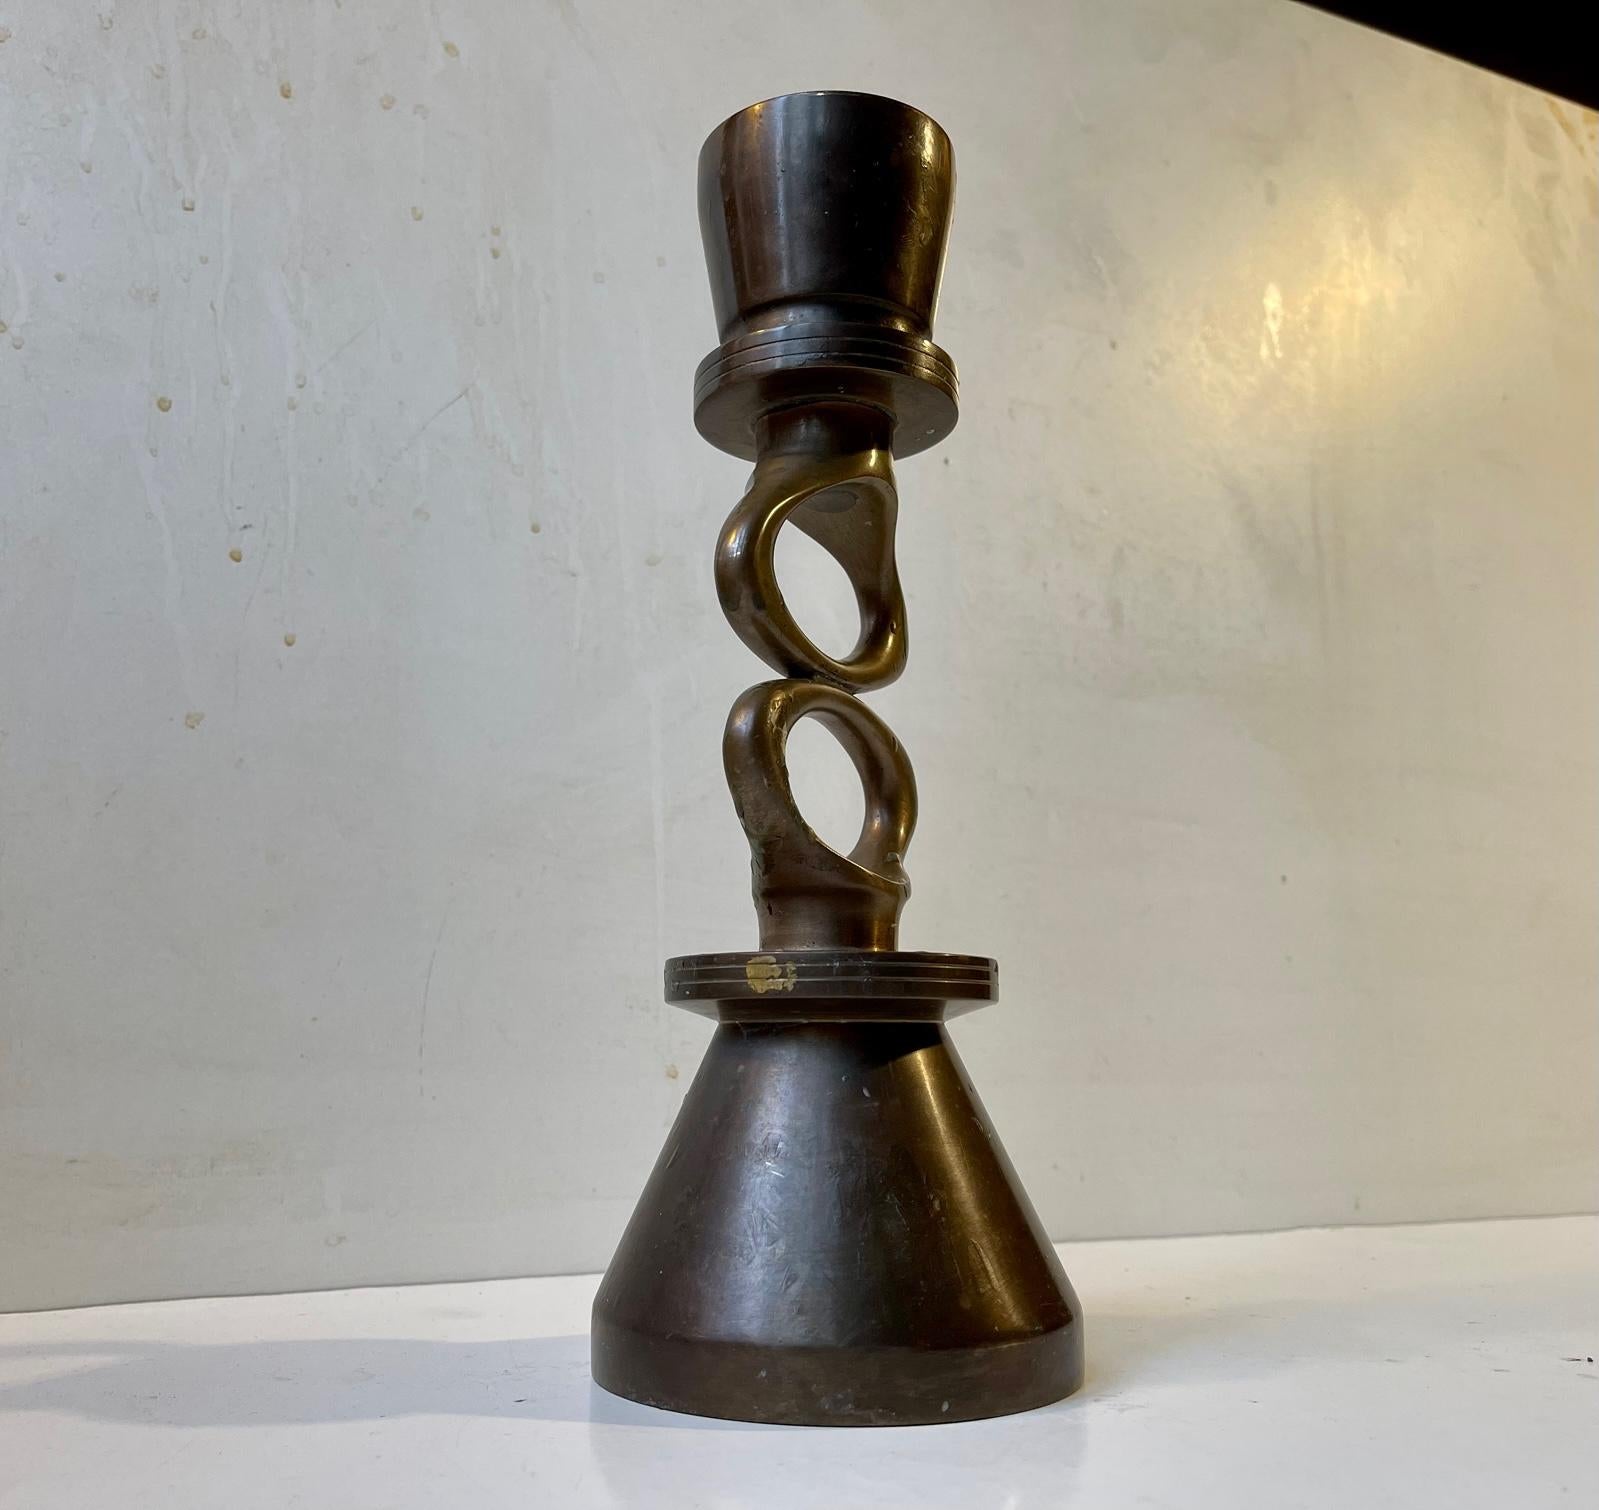 Scandinavian Modern Sculptural, Abstract & Symbolic Candleholder in Bronze, Scandinavia, 1970s For Sale